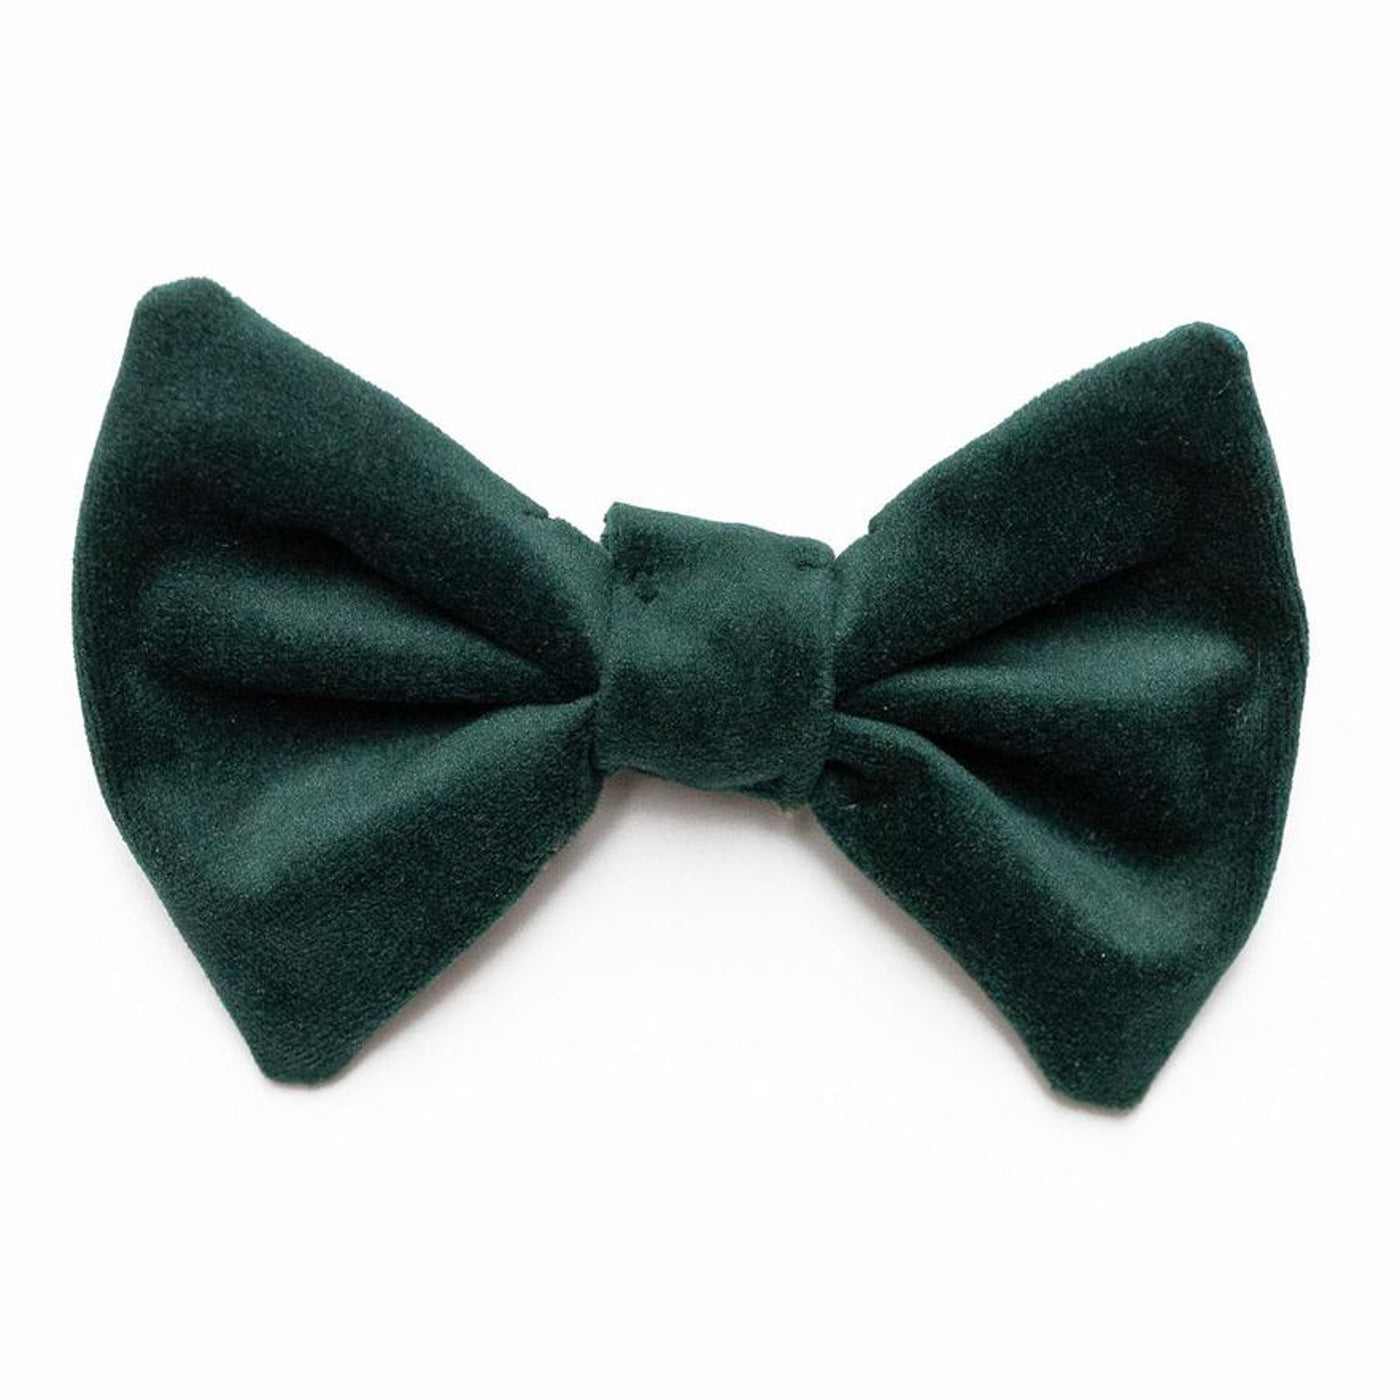 Classic dog bow tie in dark green velvet